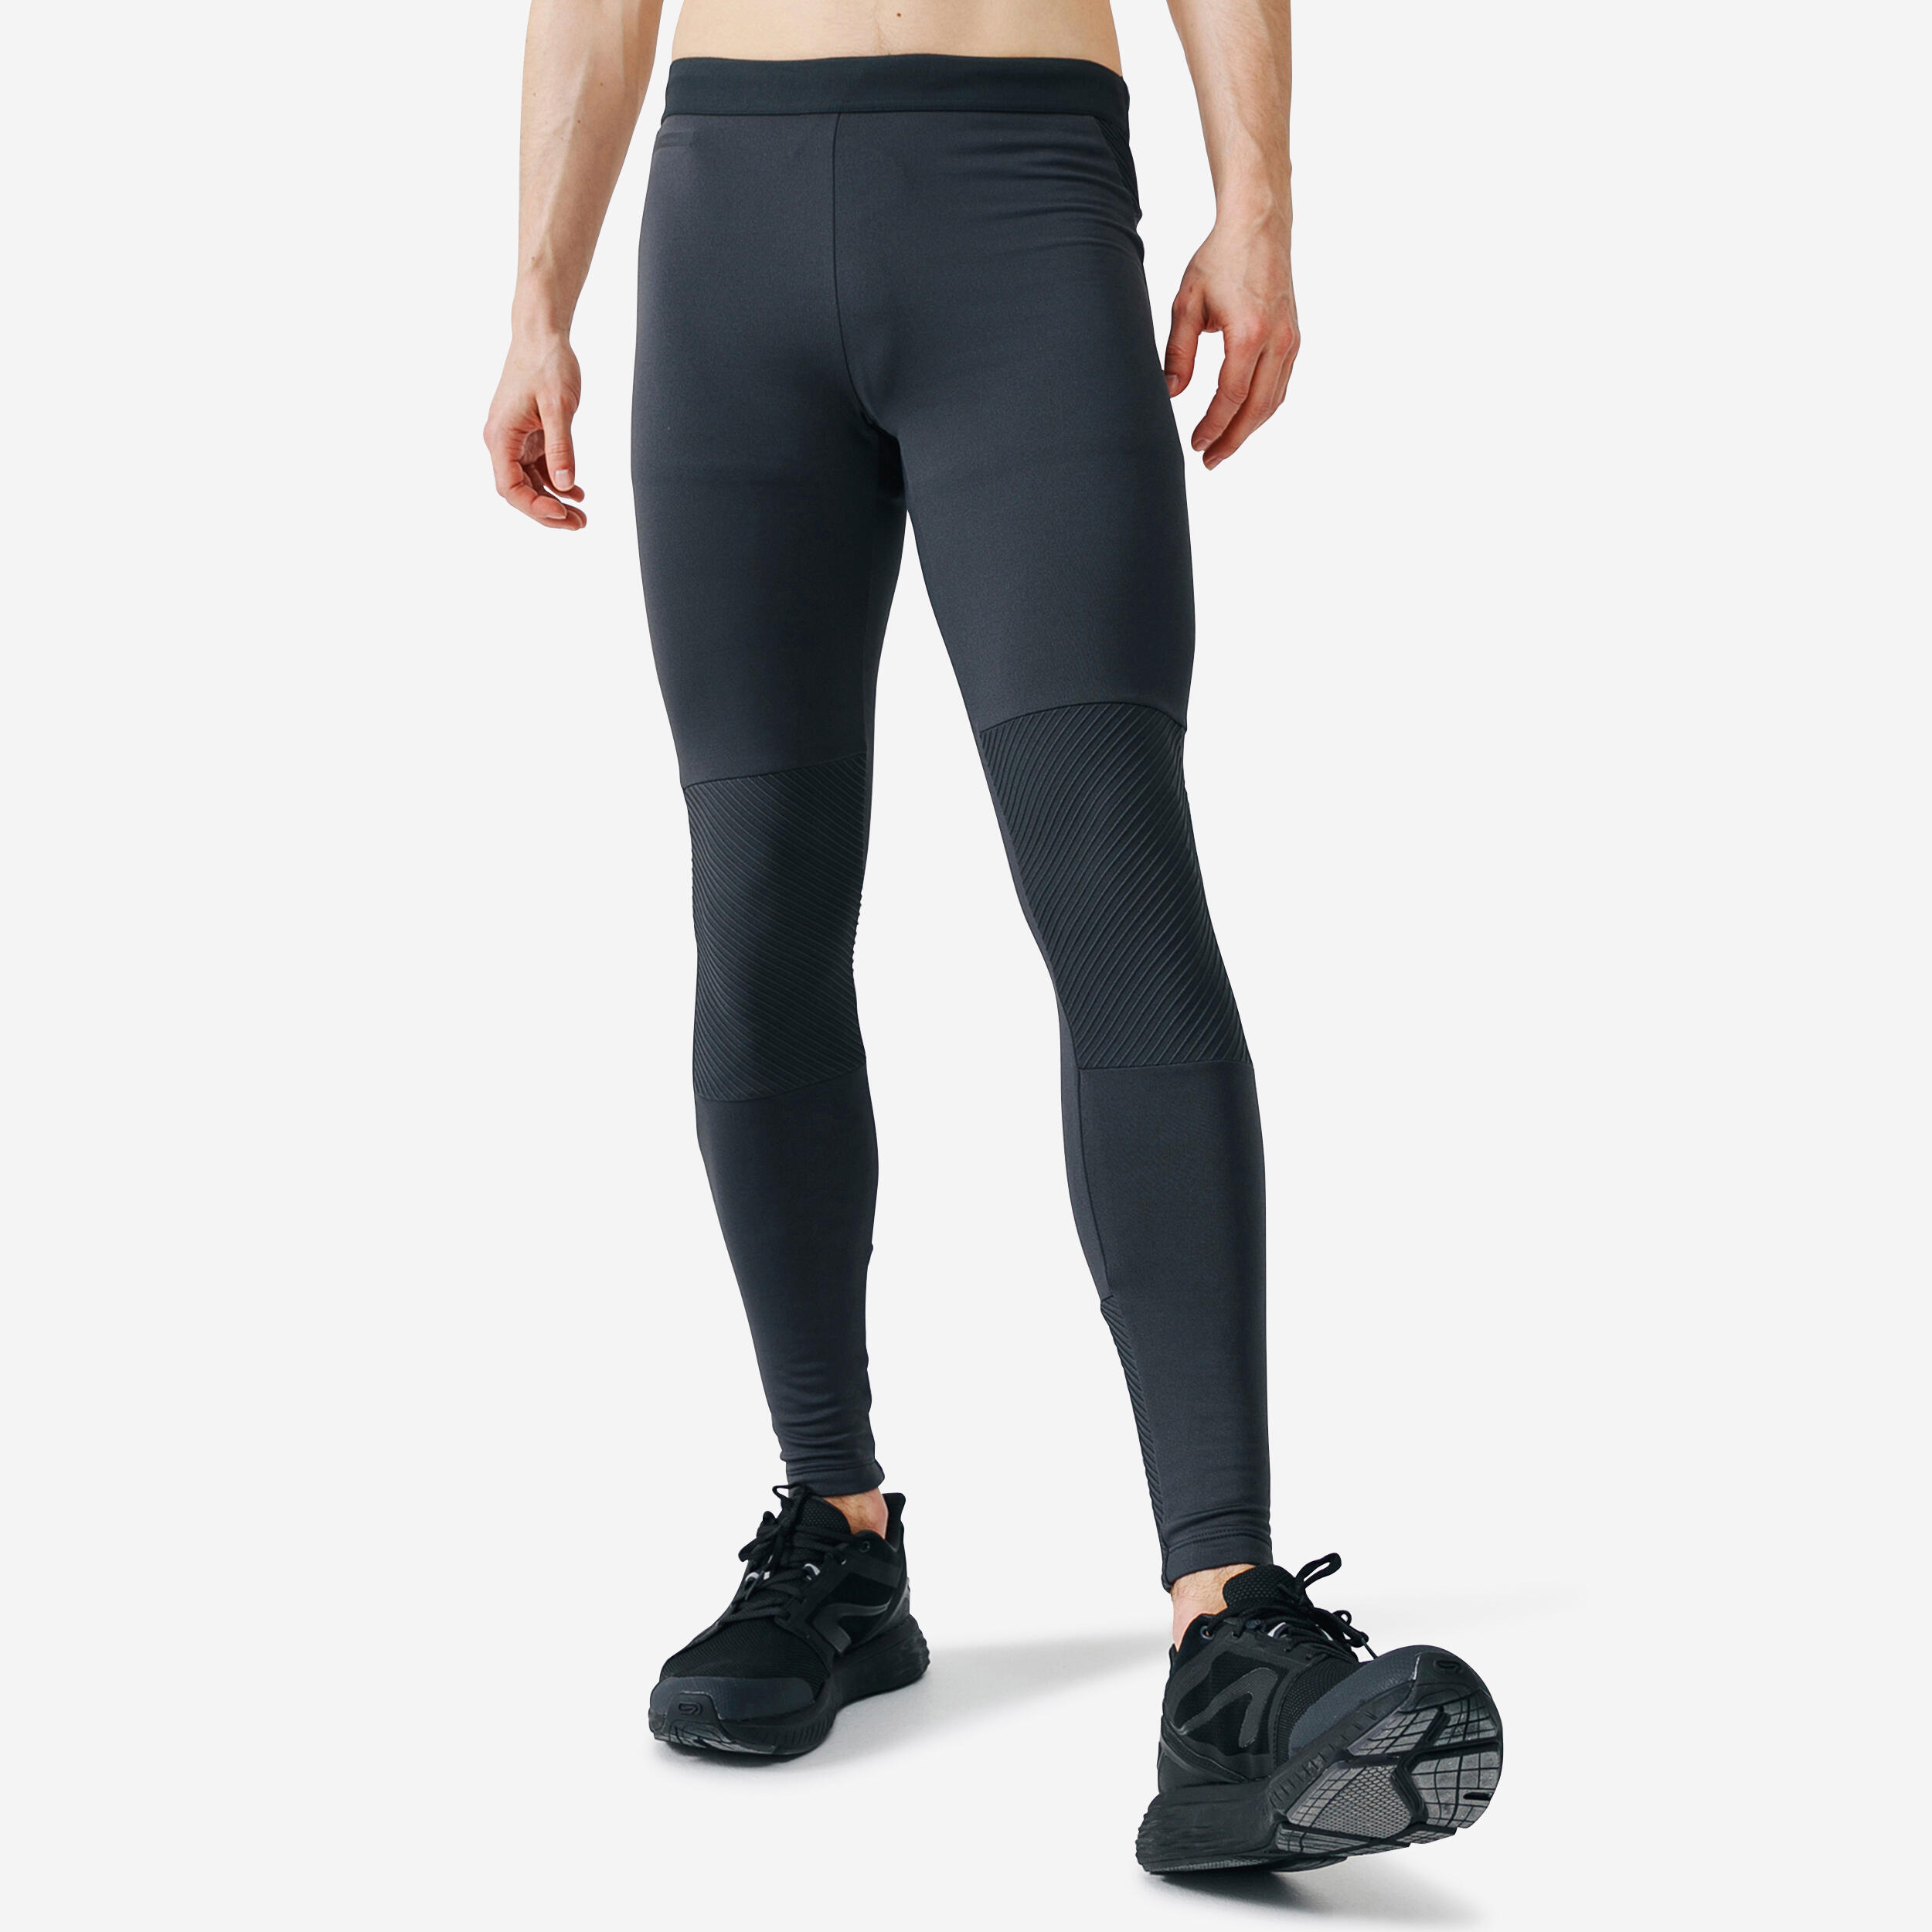 Men's warm running tights - Warm + - Grey KALENJI